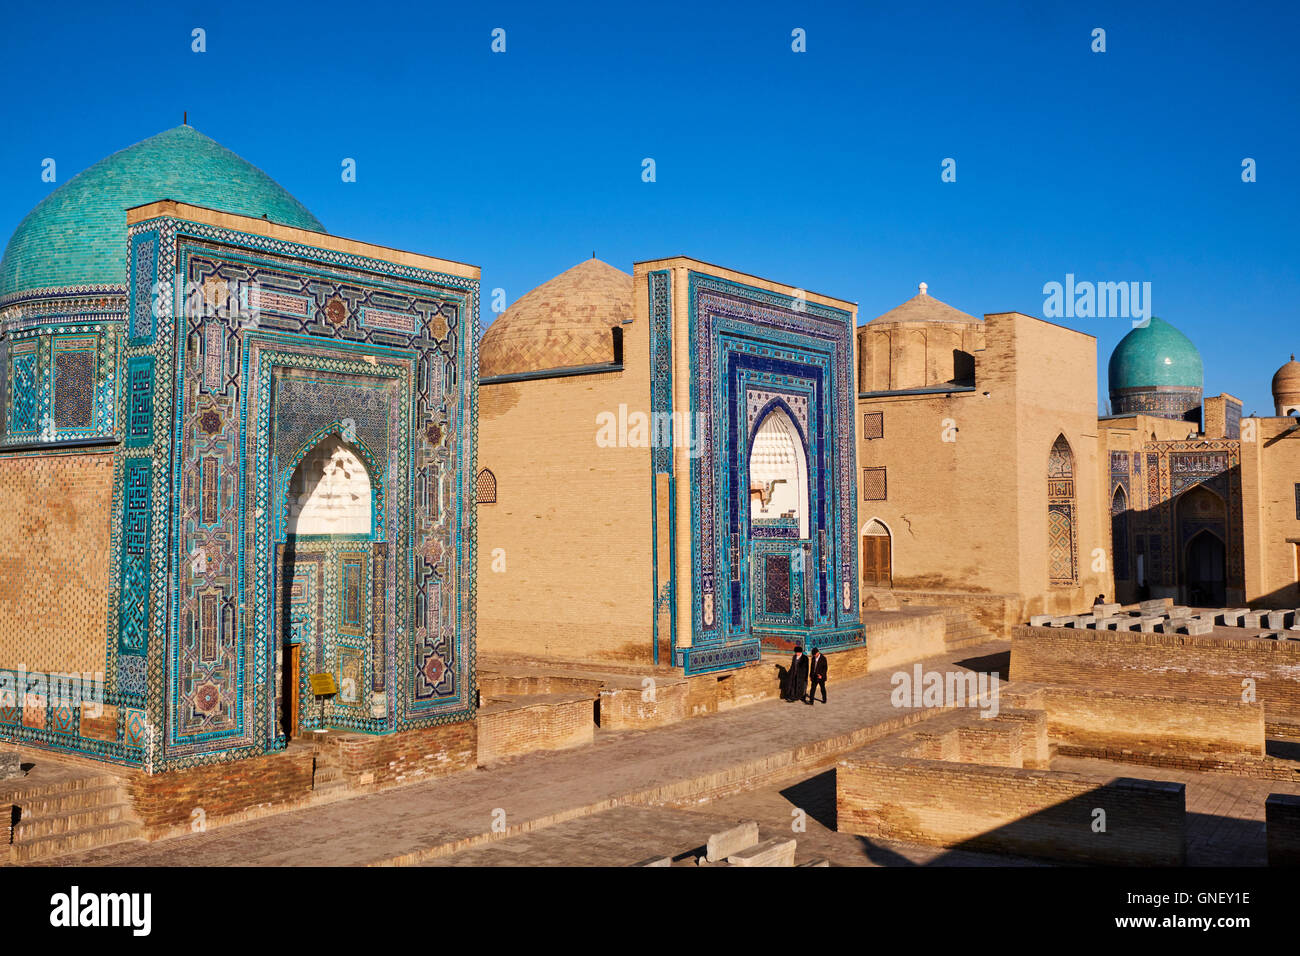 L'Ouzbékistan, Samarkand, UNESCO World Heritage, Shah i Zinda mausoleum Banque D'Images